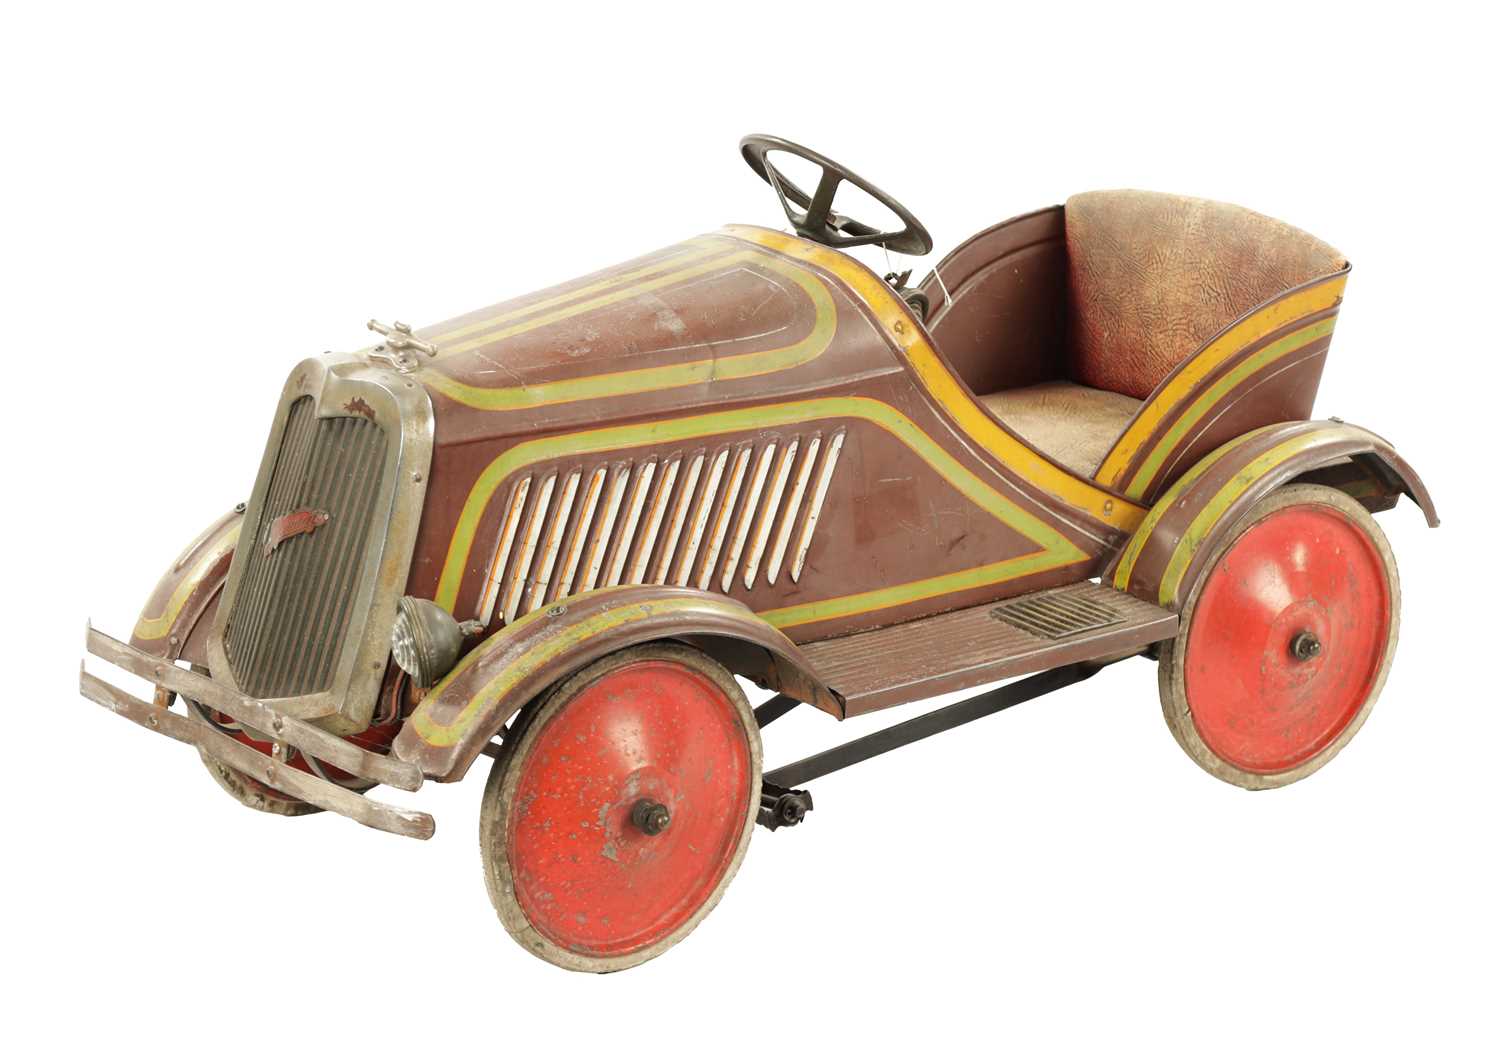 A RARE VINTAGE GERMAN CHILD’S ROADSTER PEDAL CAR CIRCA 1936